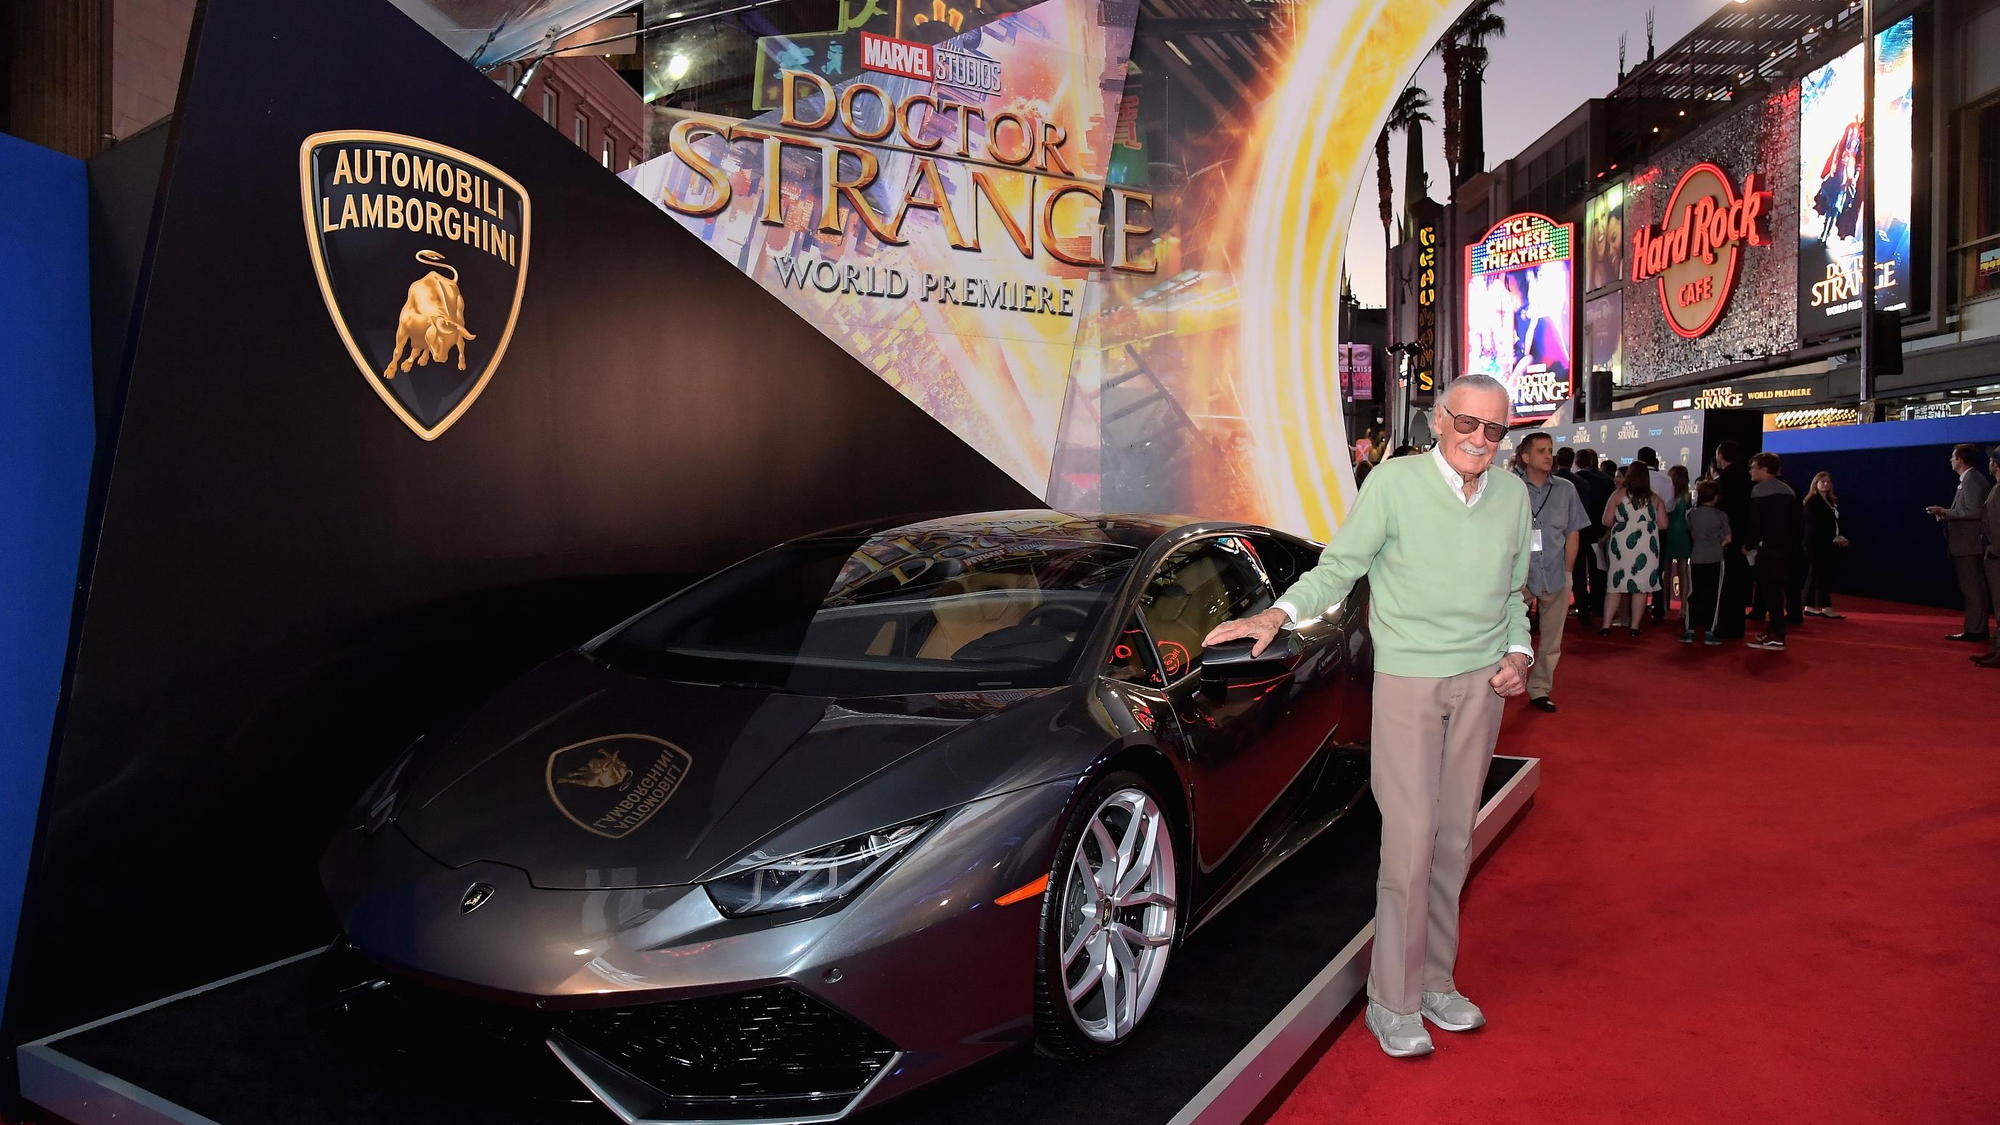 Lamborghini Huracan stars in new Marvel film Dr. Strange